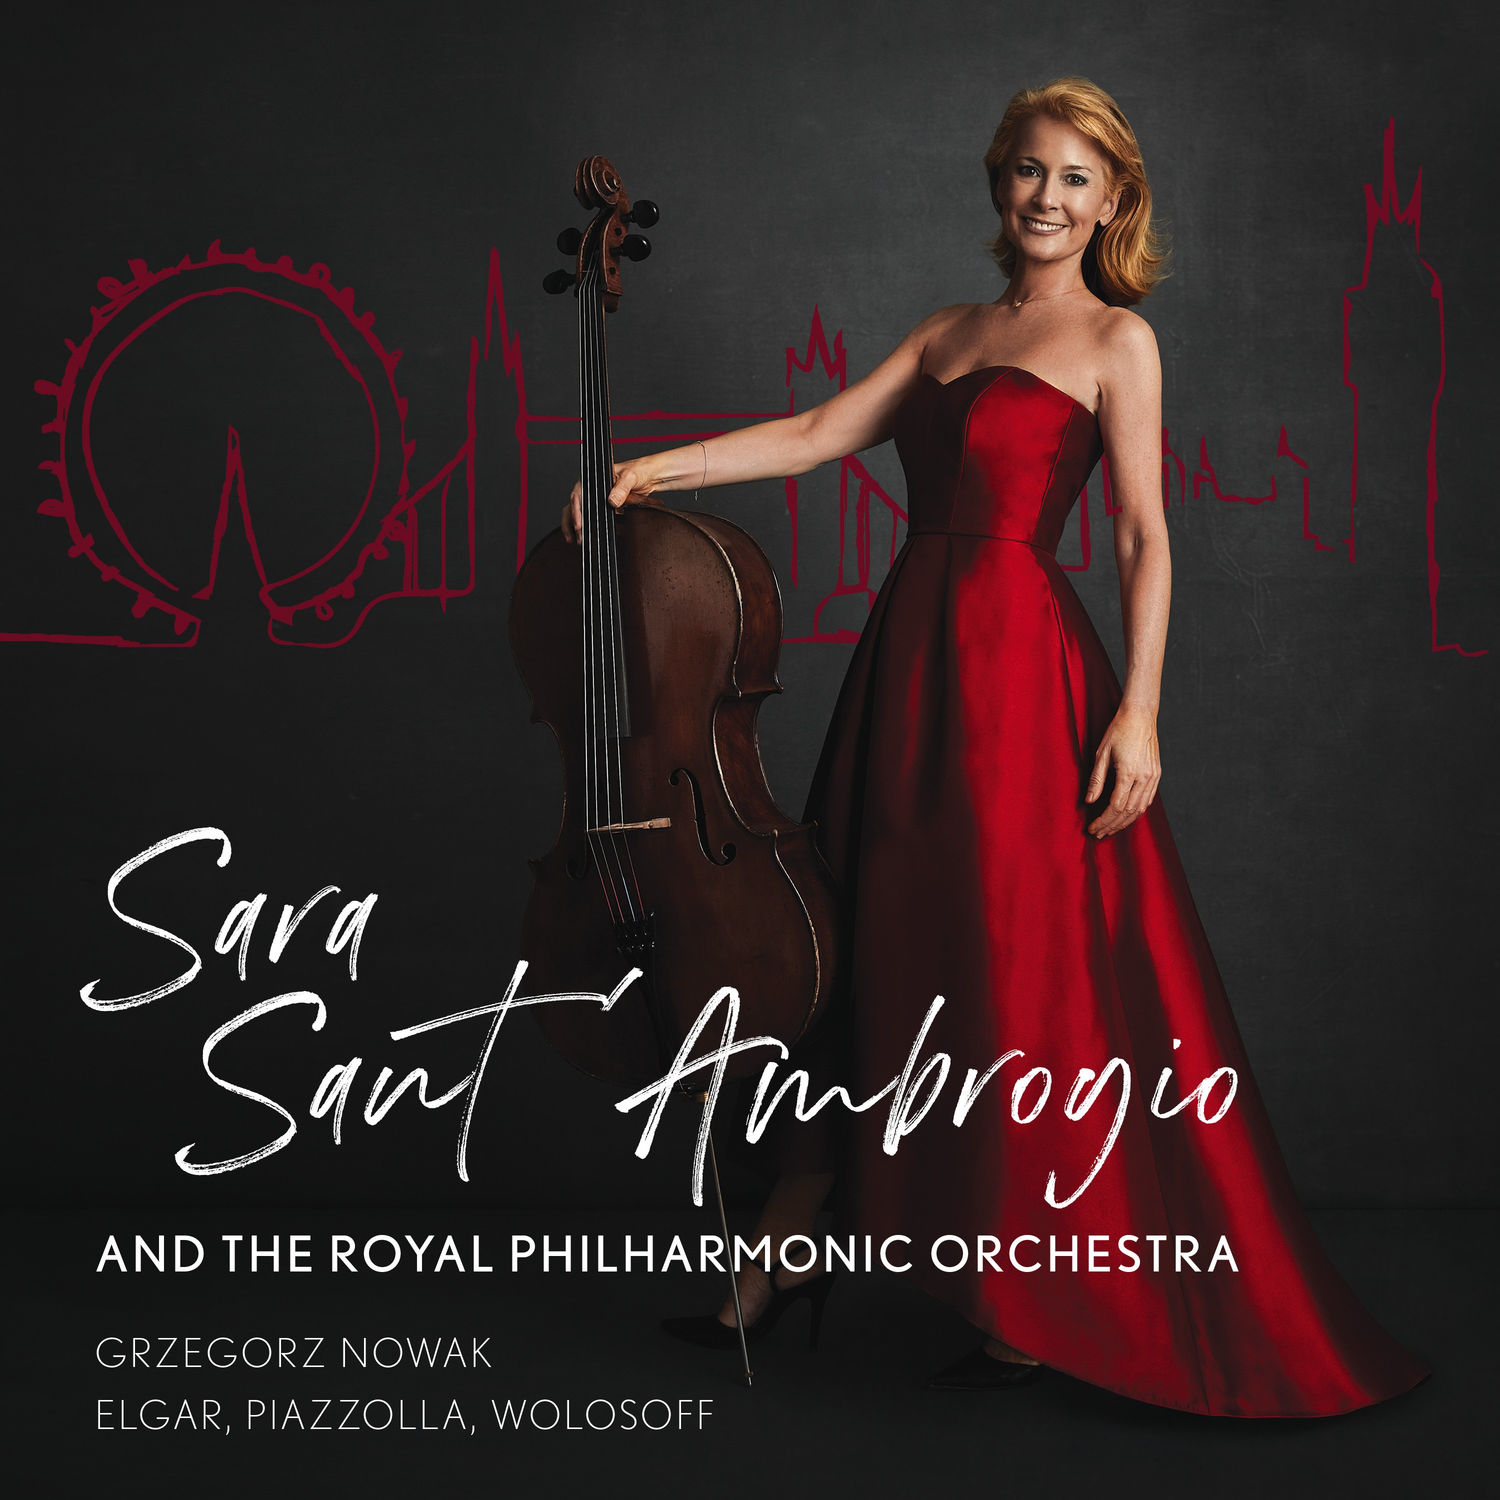 Sara Sant’ambrogio – Elgar, Piazzolla, Wolosoff